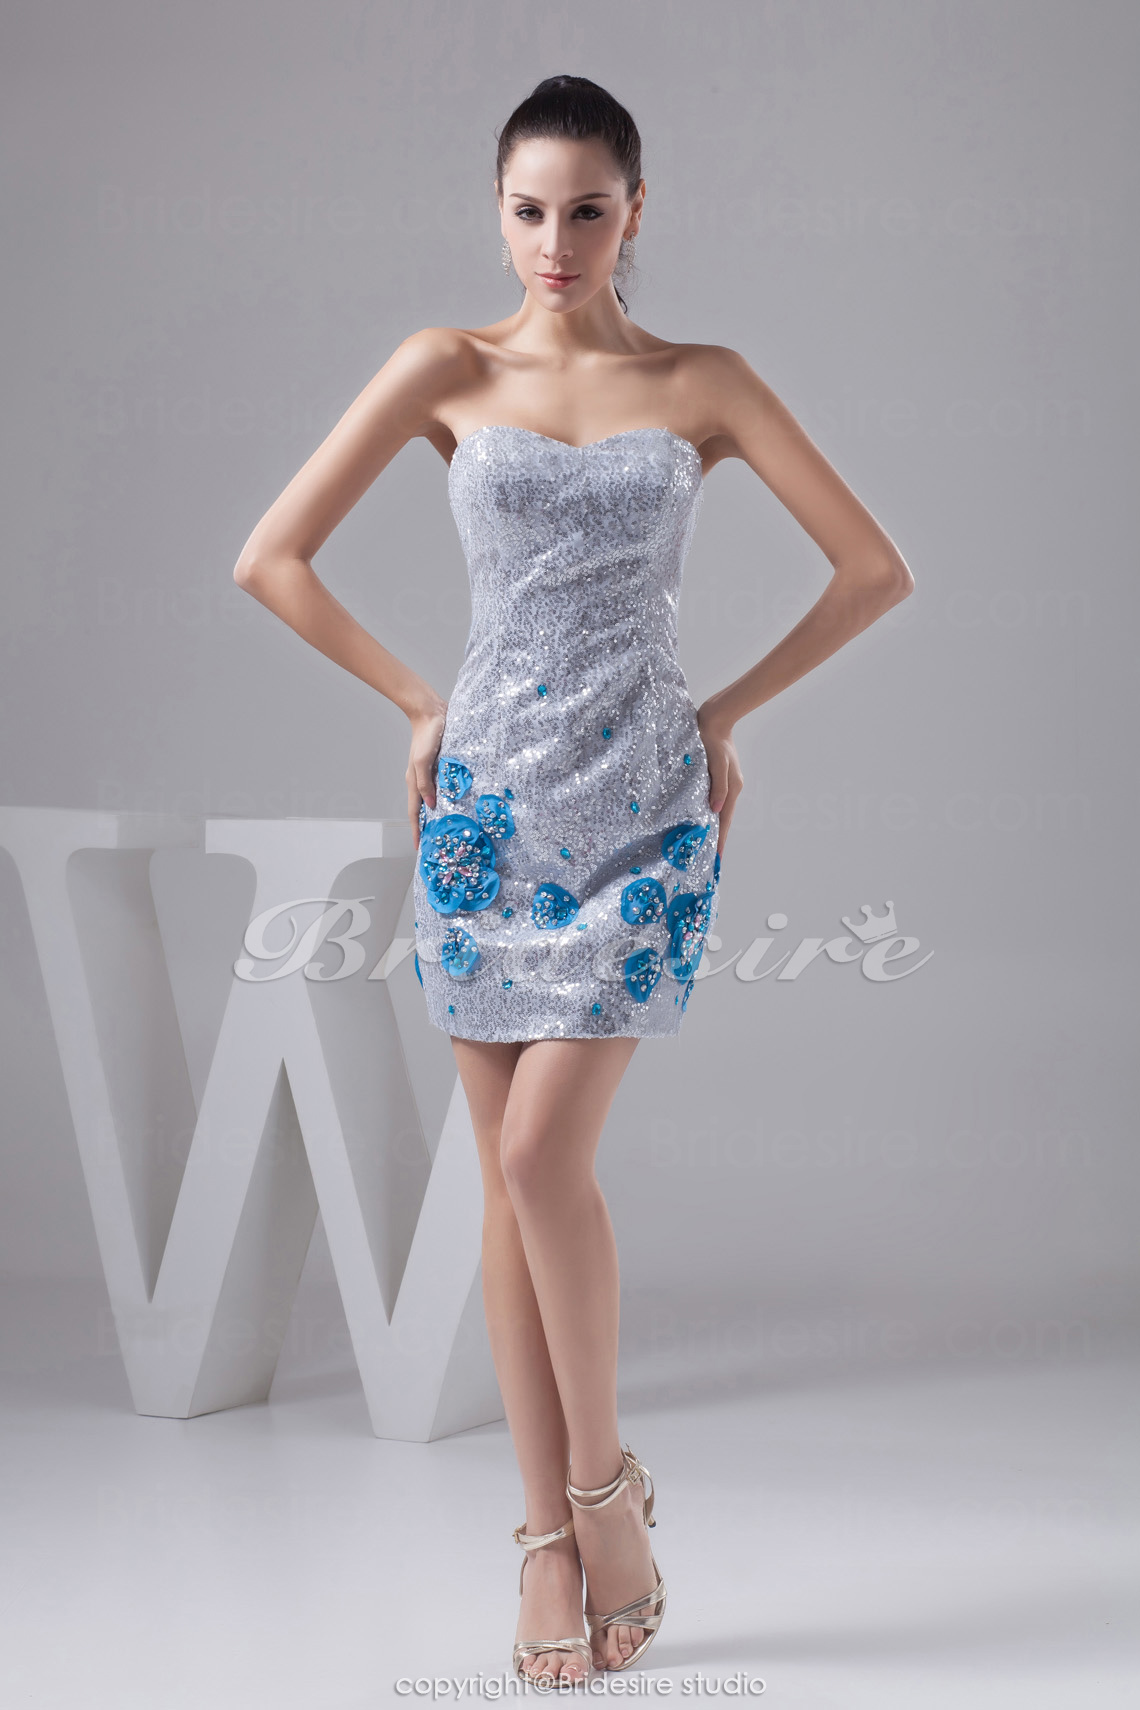 Sheath/Column Sweetheart Short/Mini Sleeveless Lace Dress